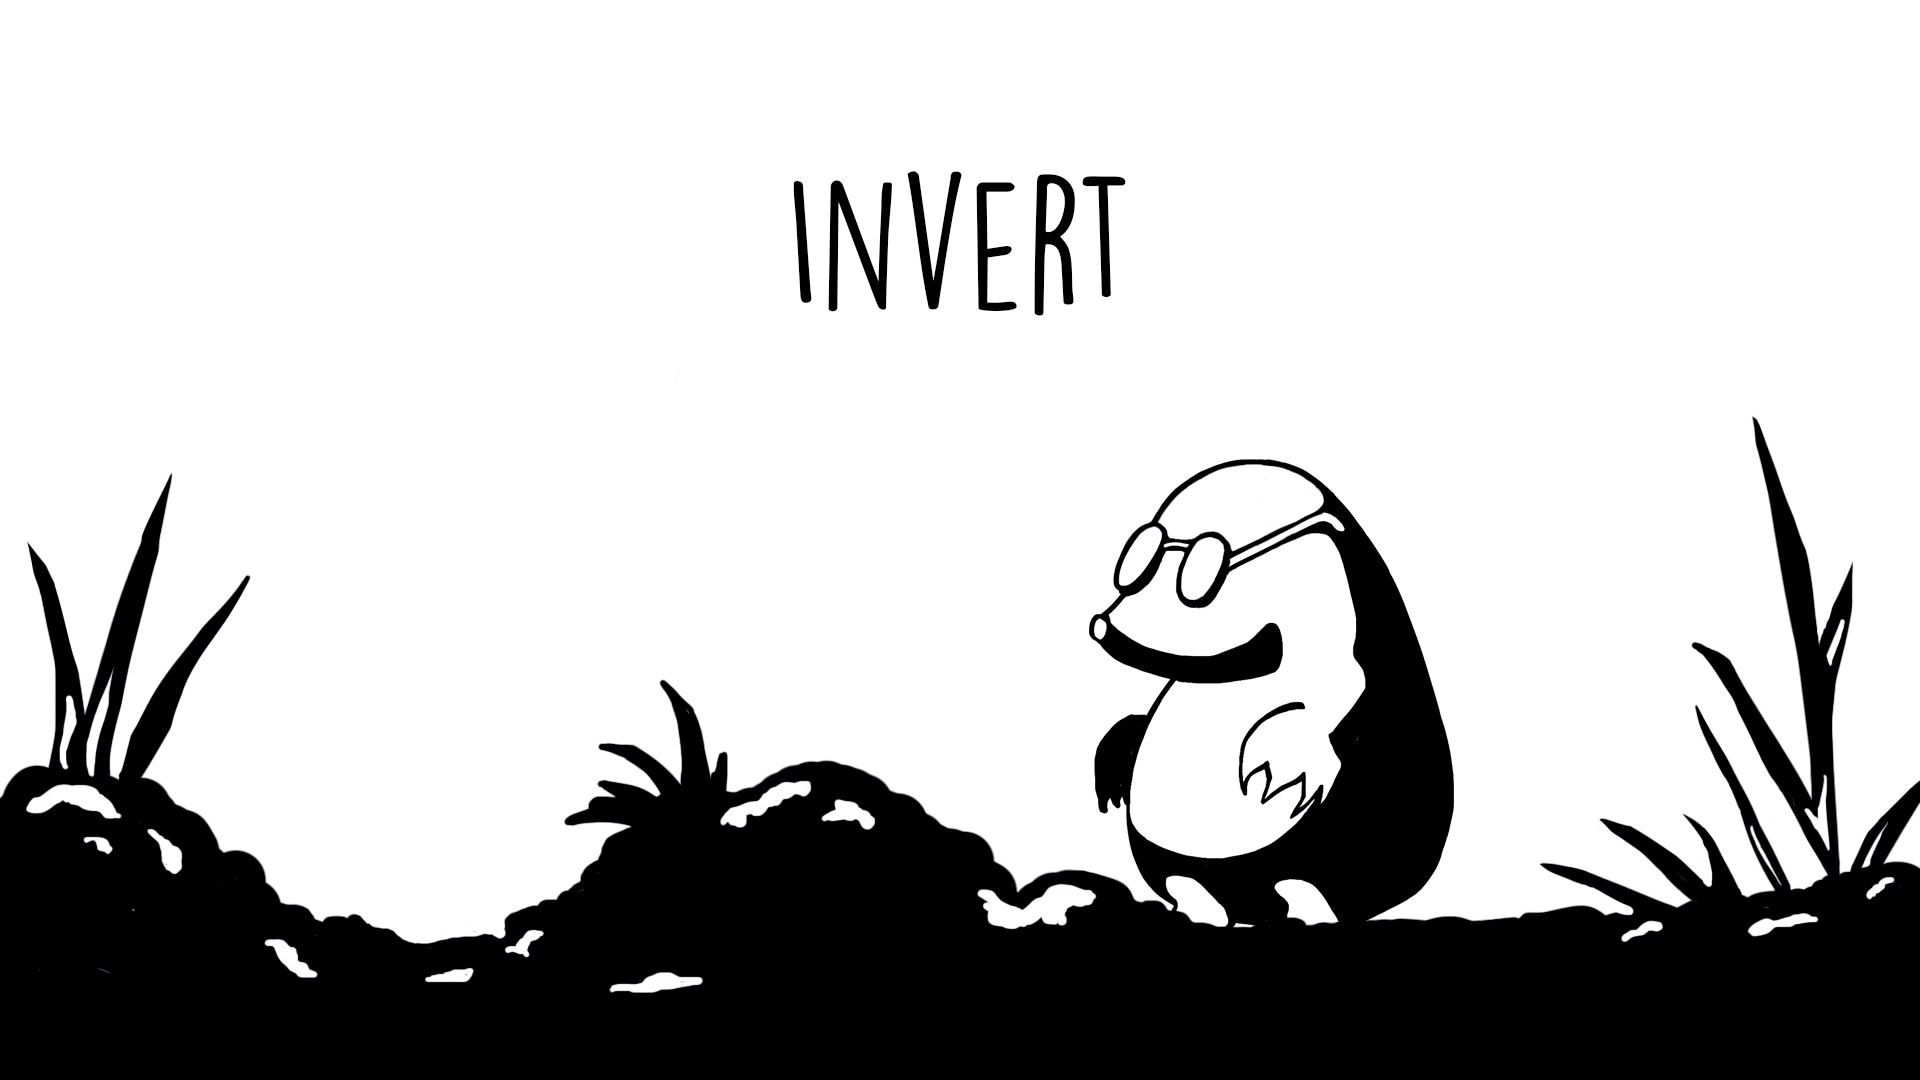 Invert